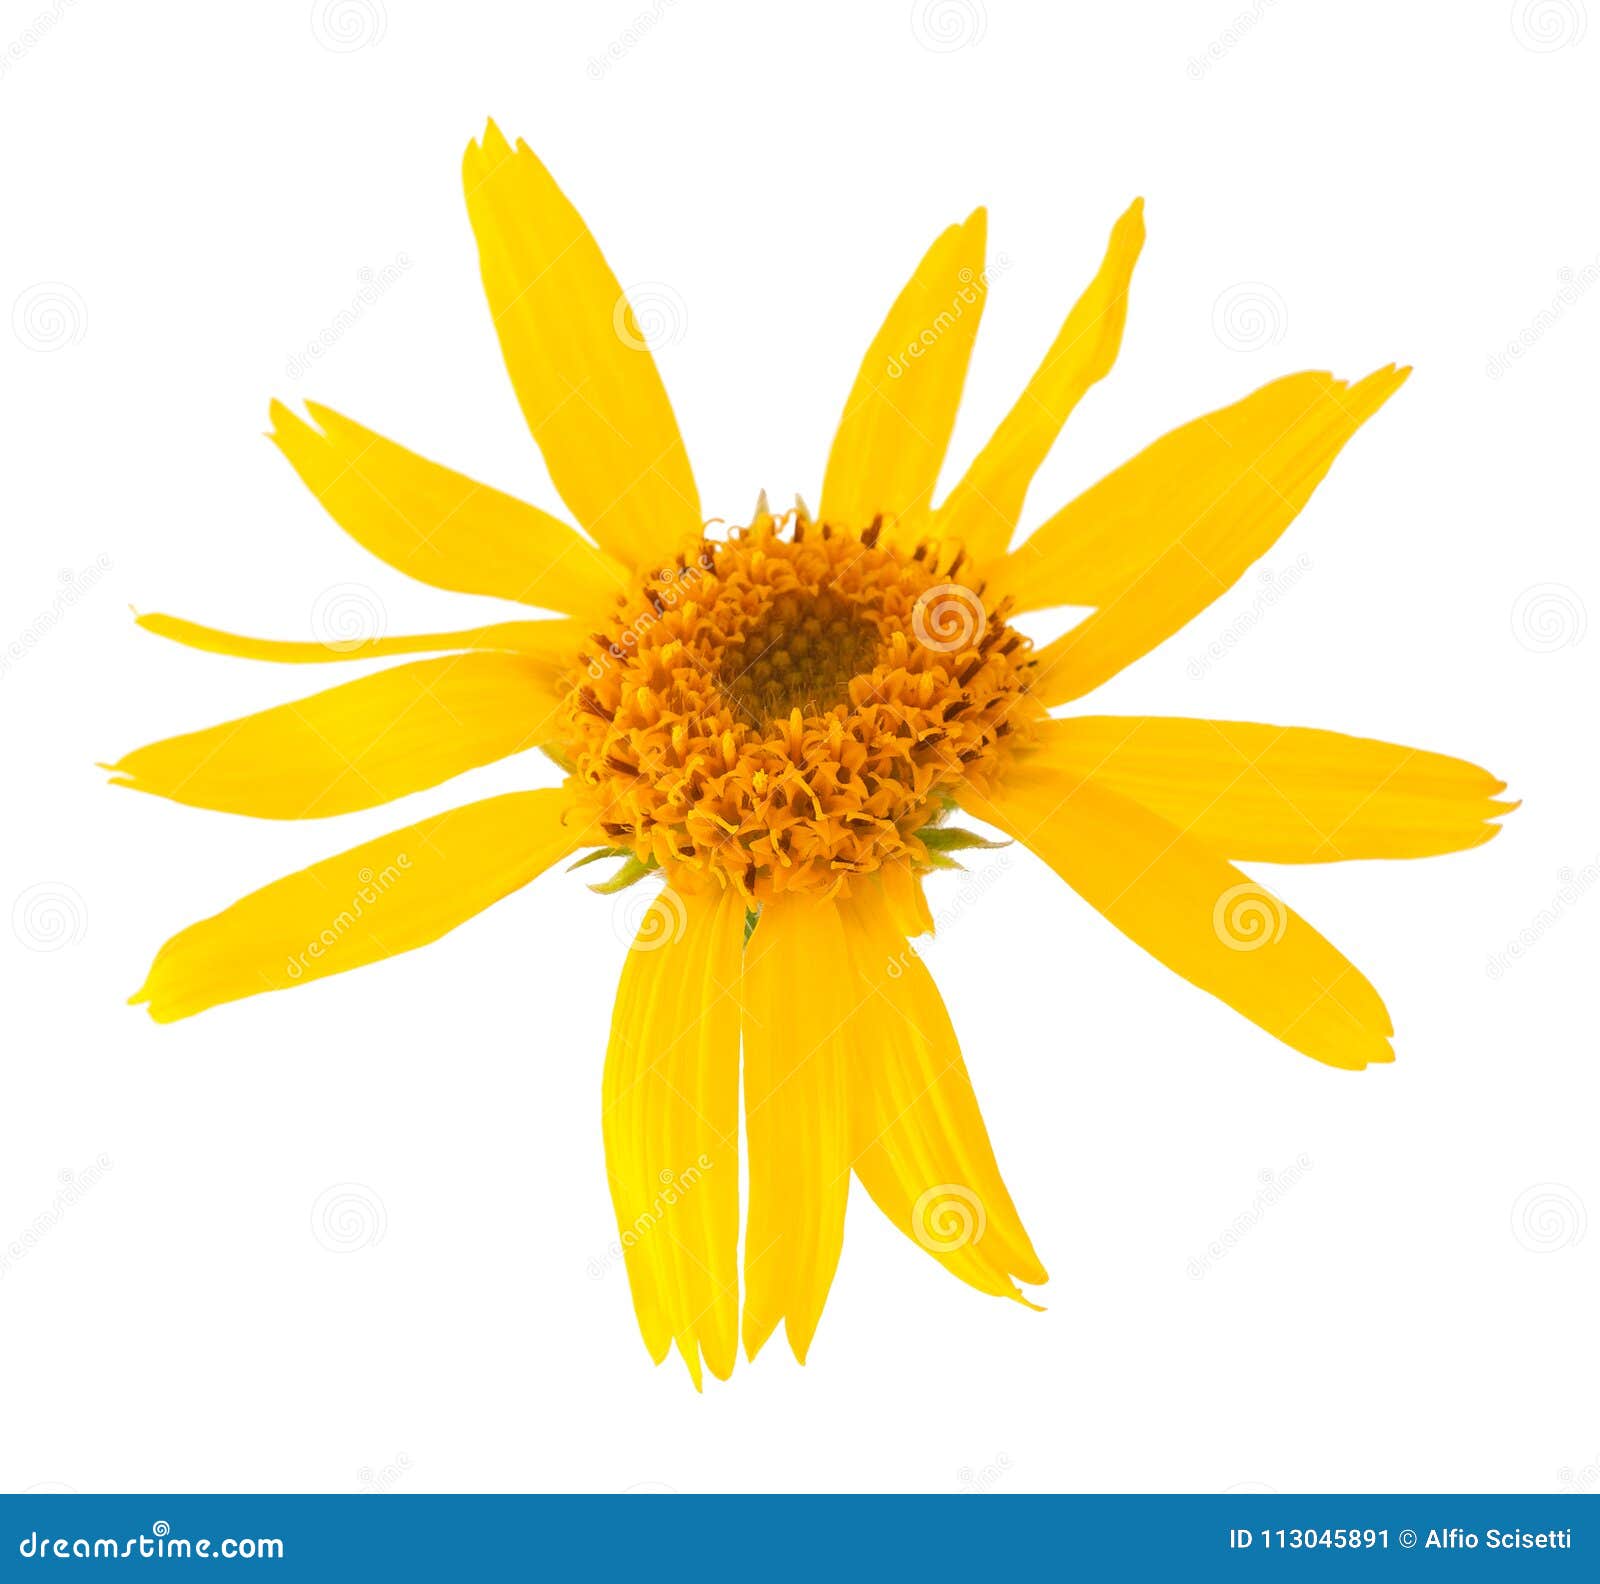 arnica montana flower